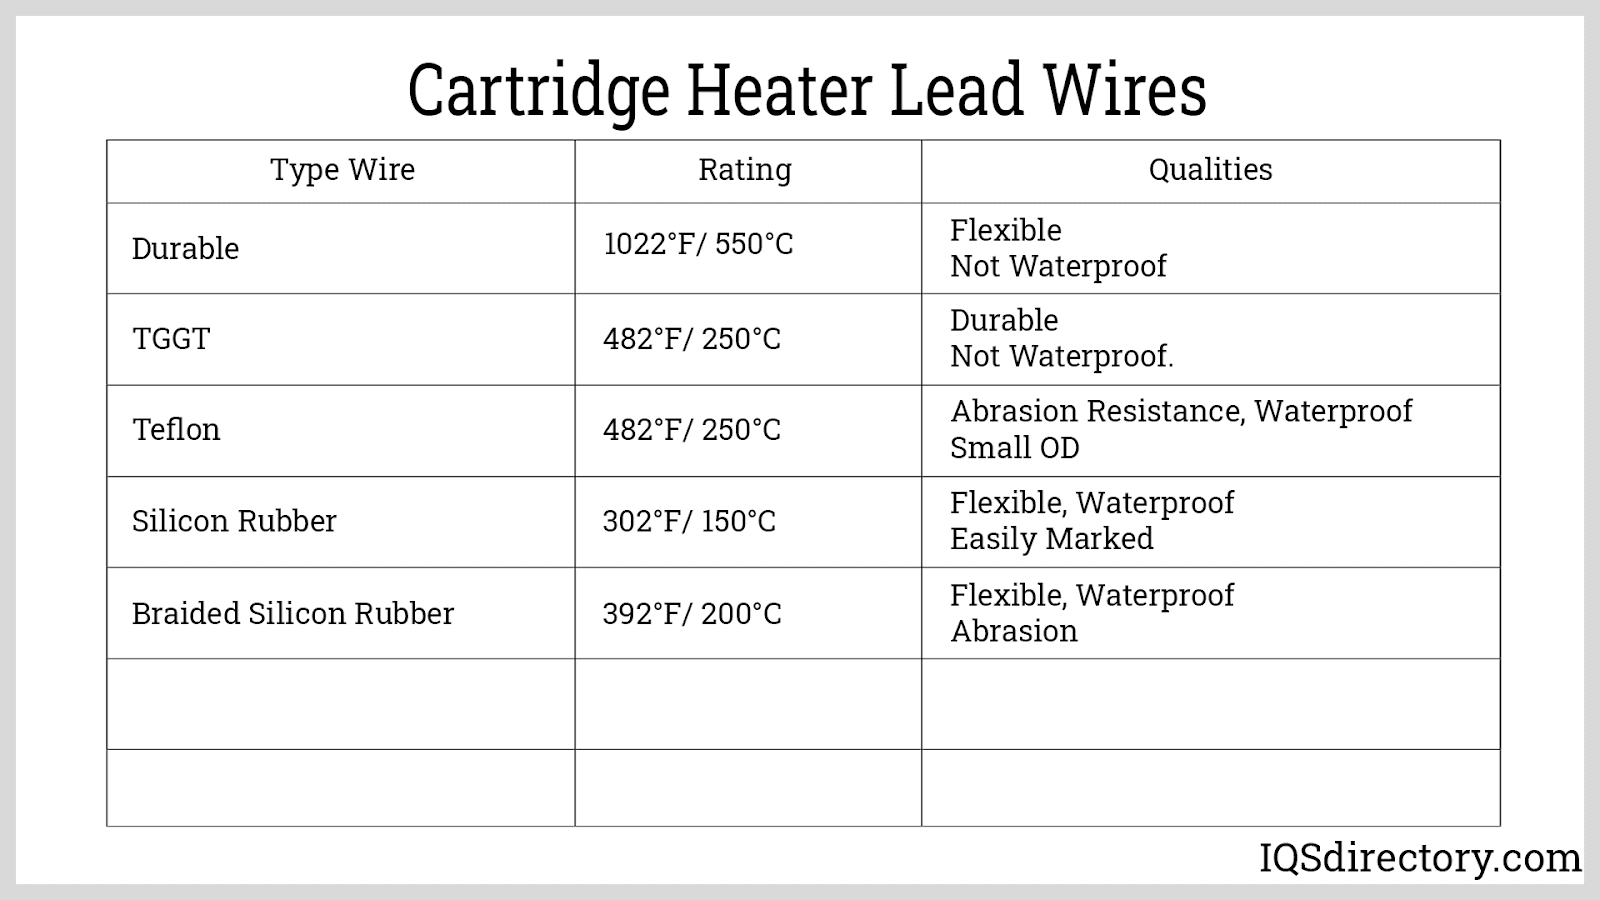 Cartridge Heater Lead Wires